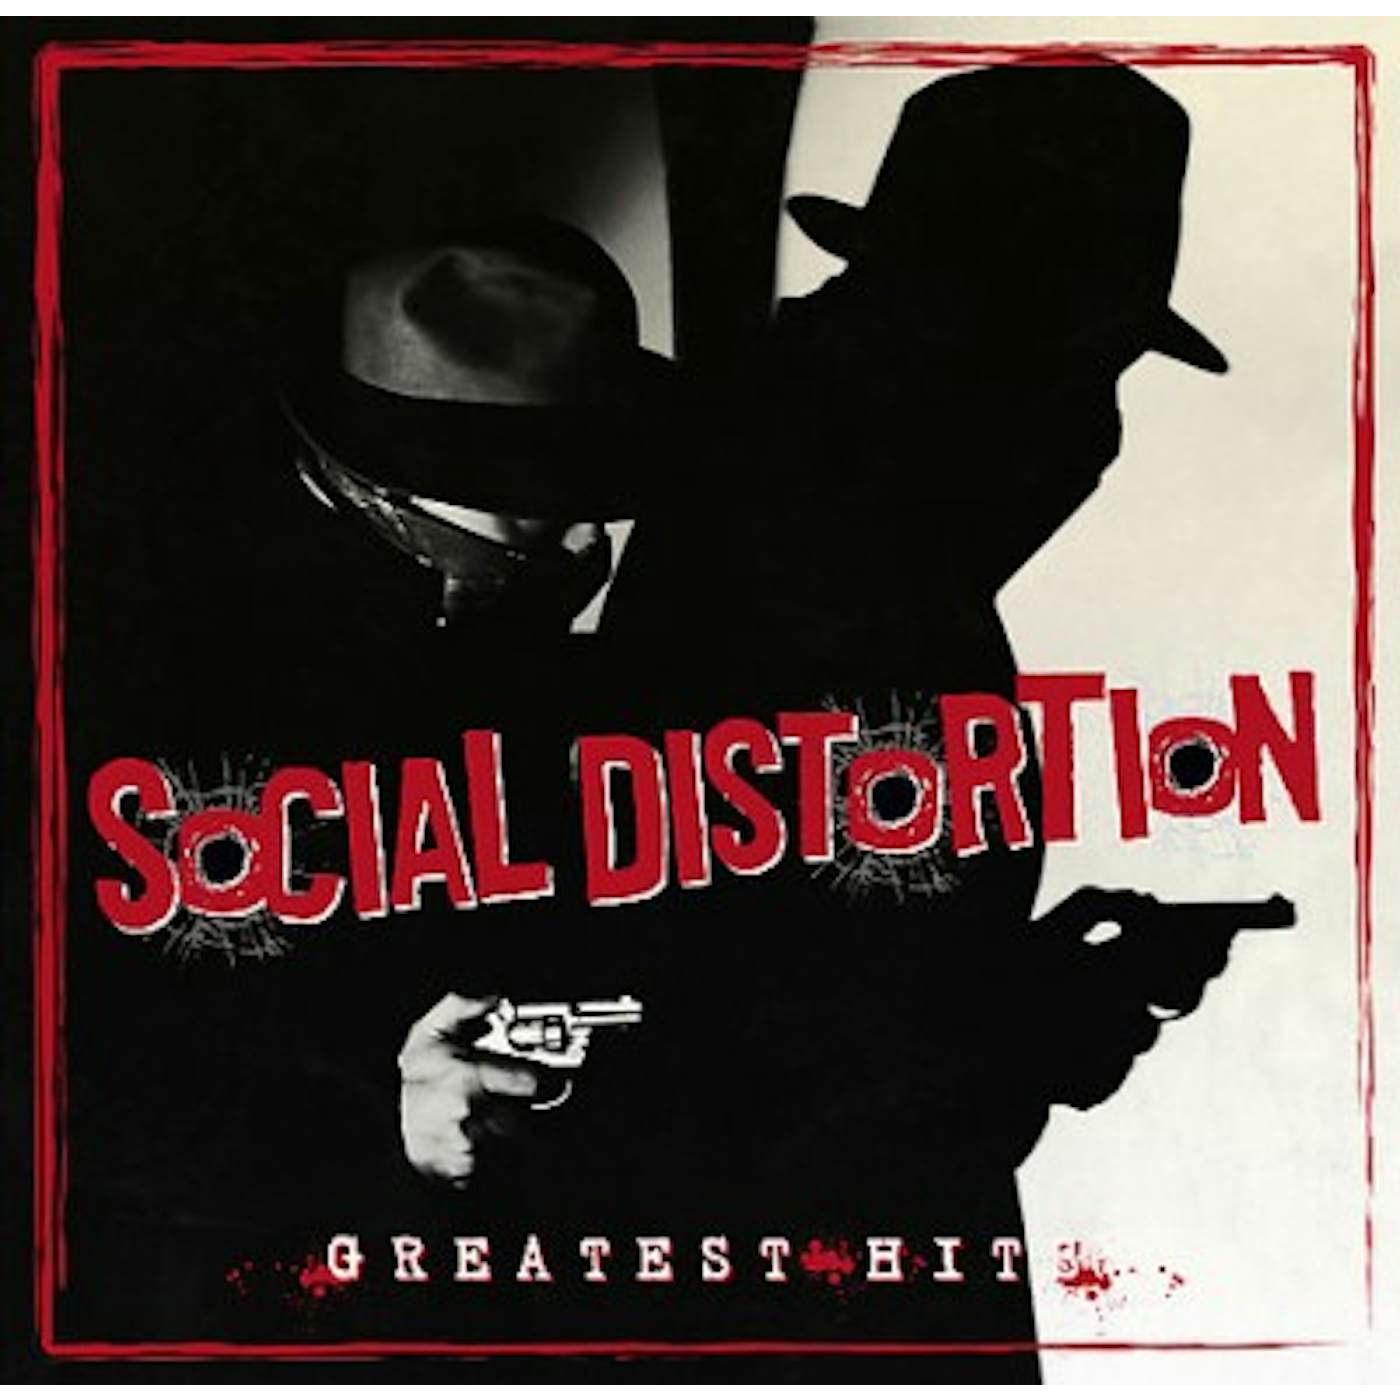 Social Distortion Greatest Hits Vinyl Record